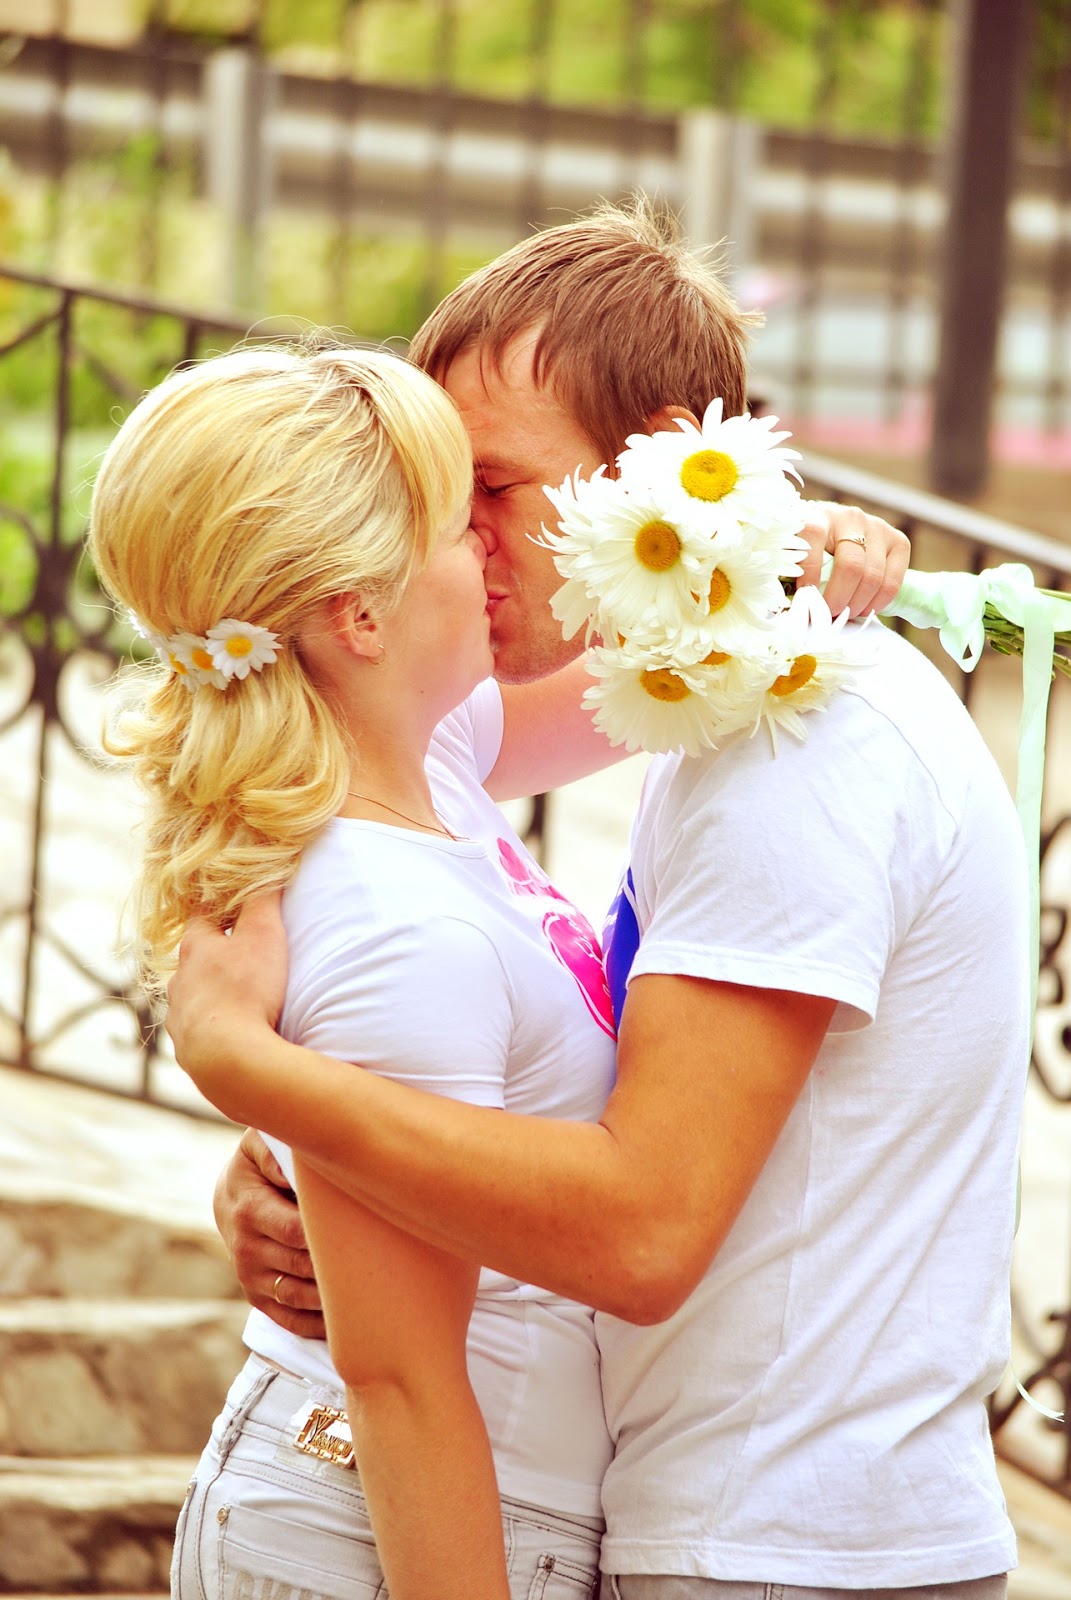 Lovers flowers. Красивые пары. Красивые парочки. Красивые влюбленные пары. Красивая пара влюбленных.